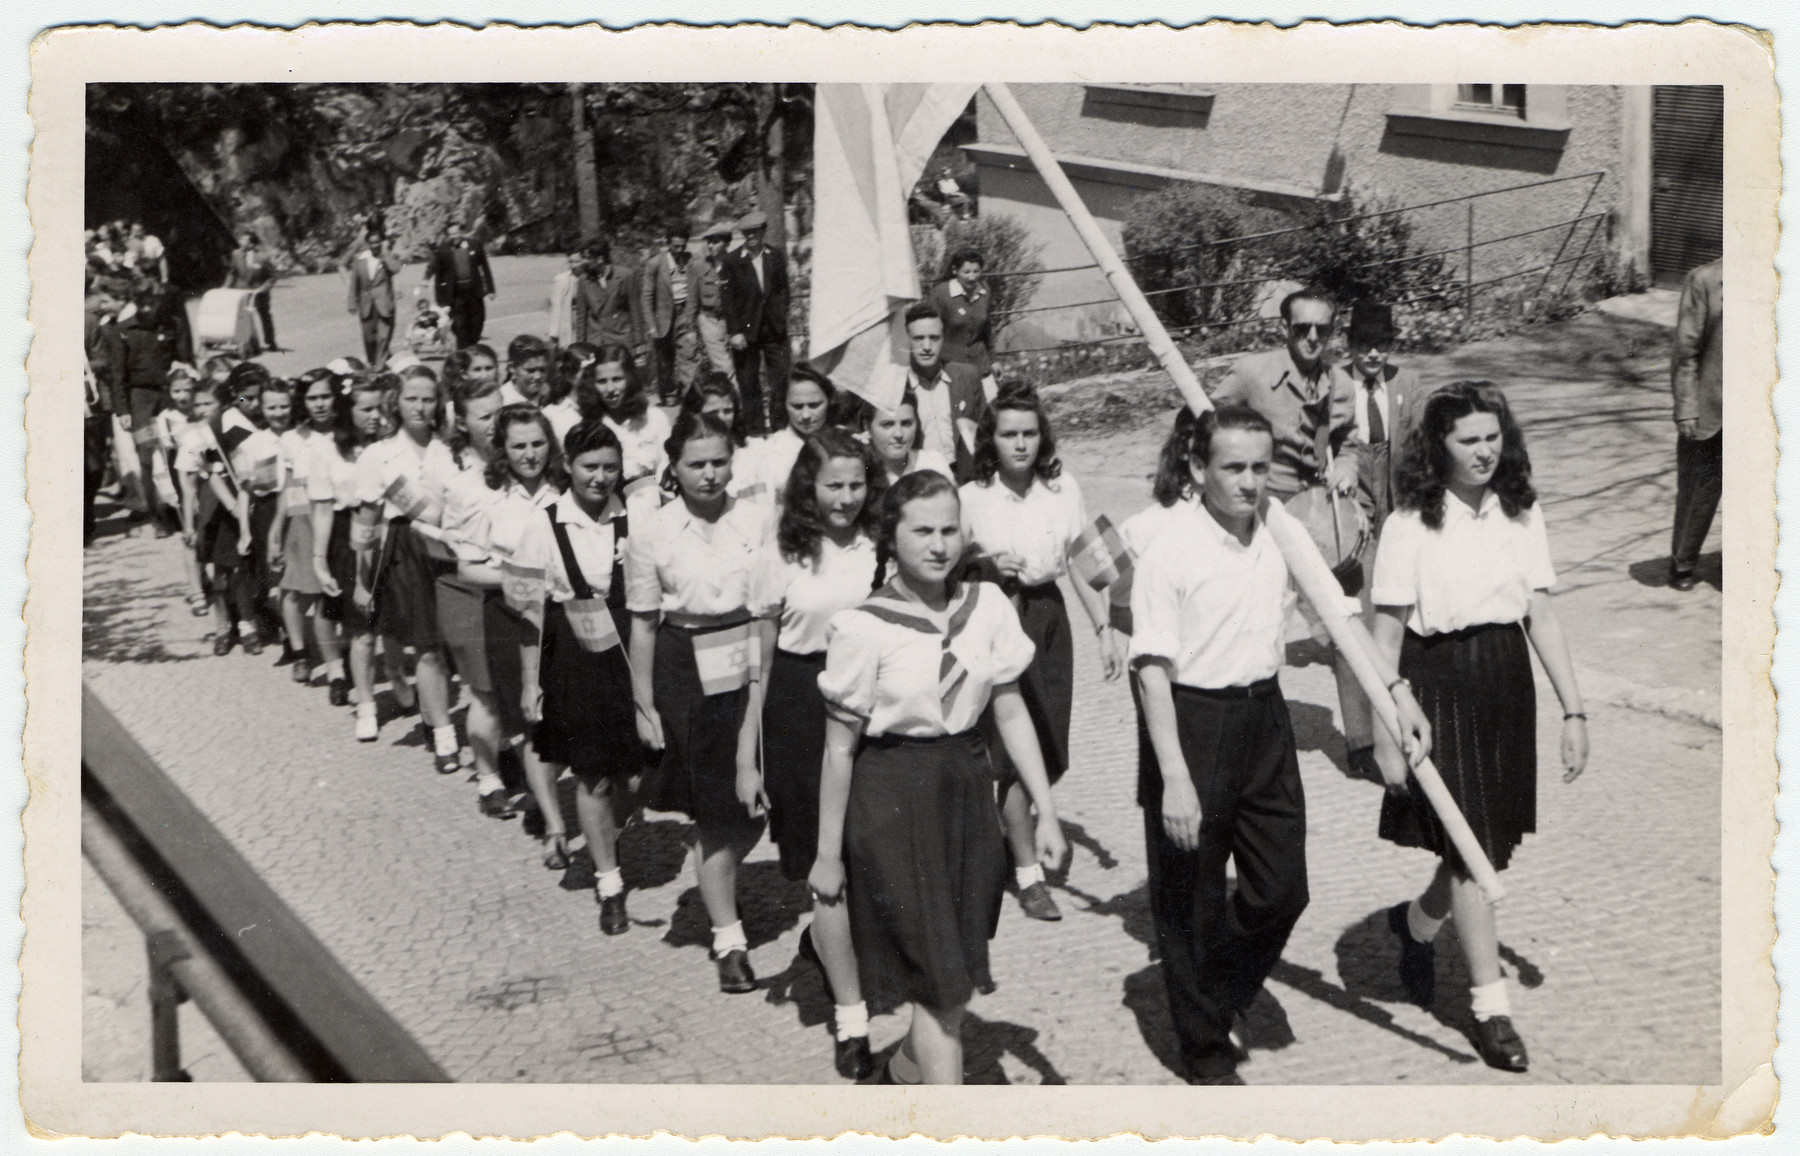 Students from the Chaim Nachman Bialik school in Bad Gastein march behind a Zionist flag.